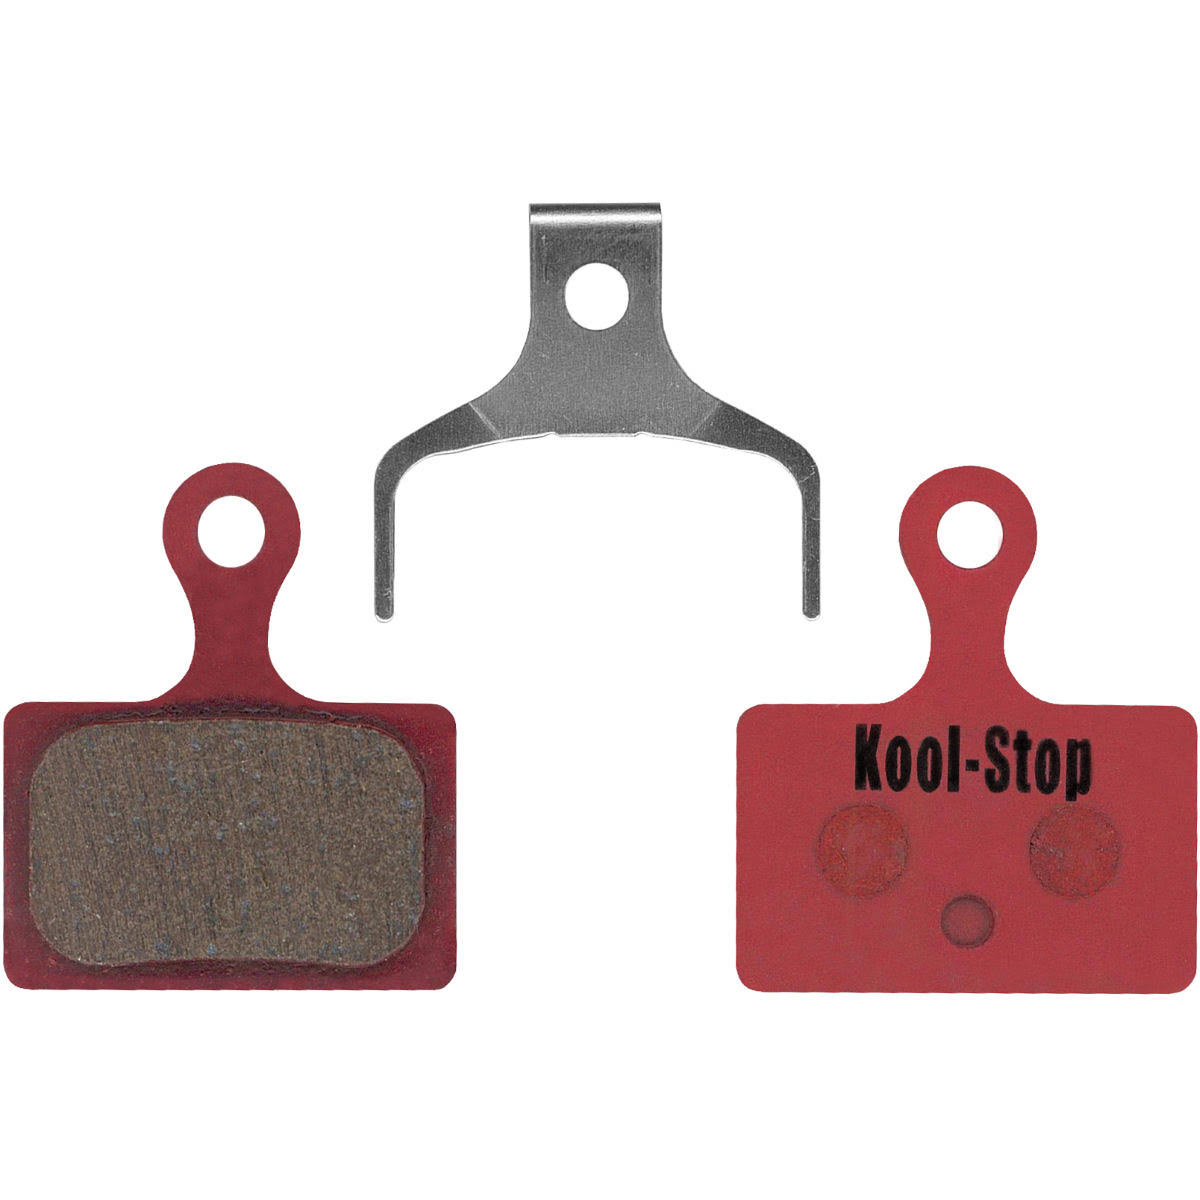 Kool-Stop Steel Disc Pads (Shimano)